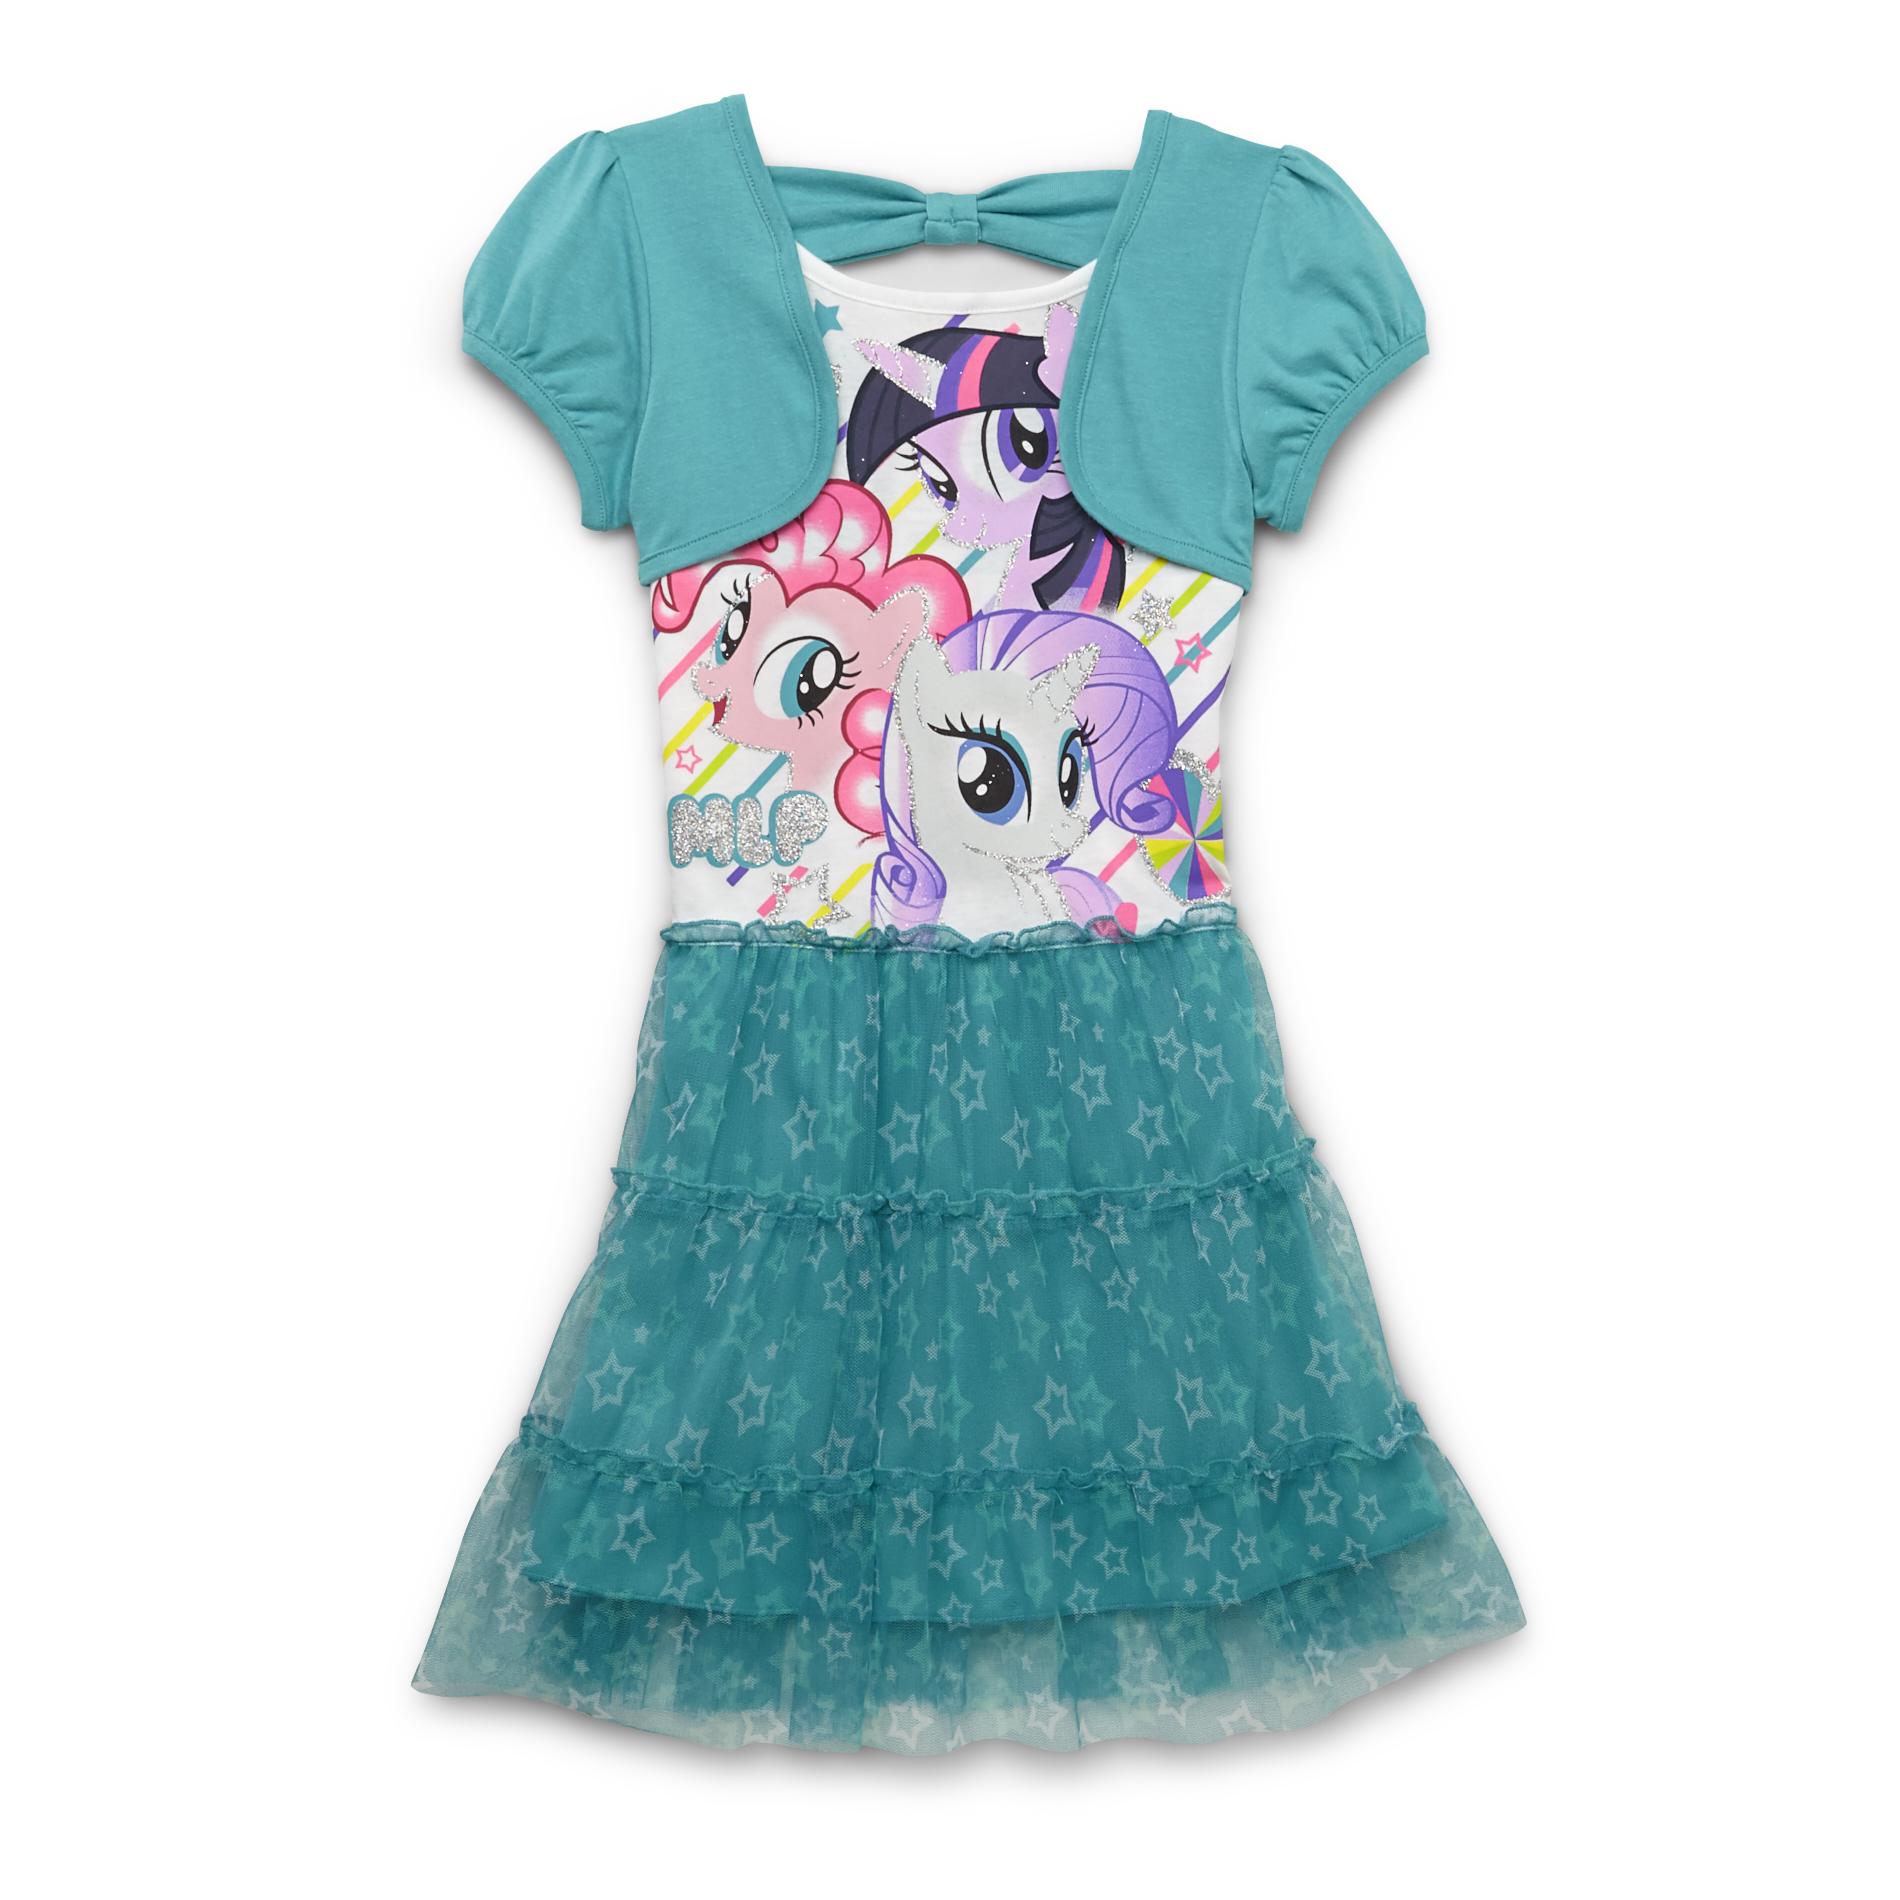 My Little Pony Girl's Tunic Dress - Hearts & Stars